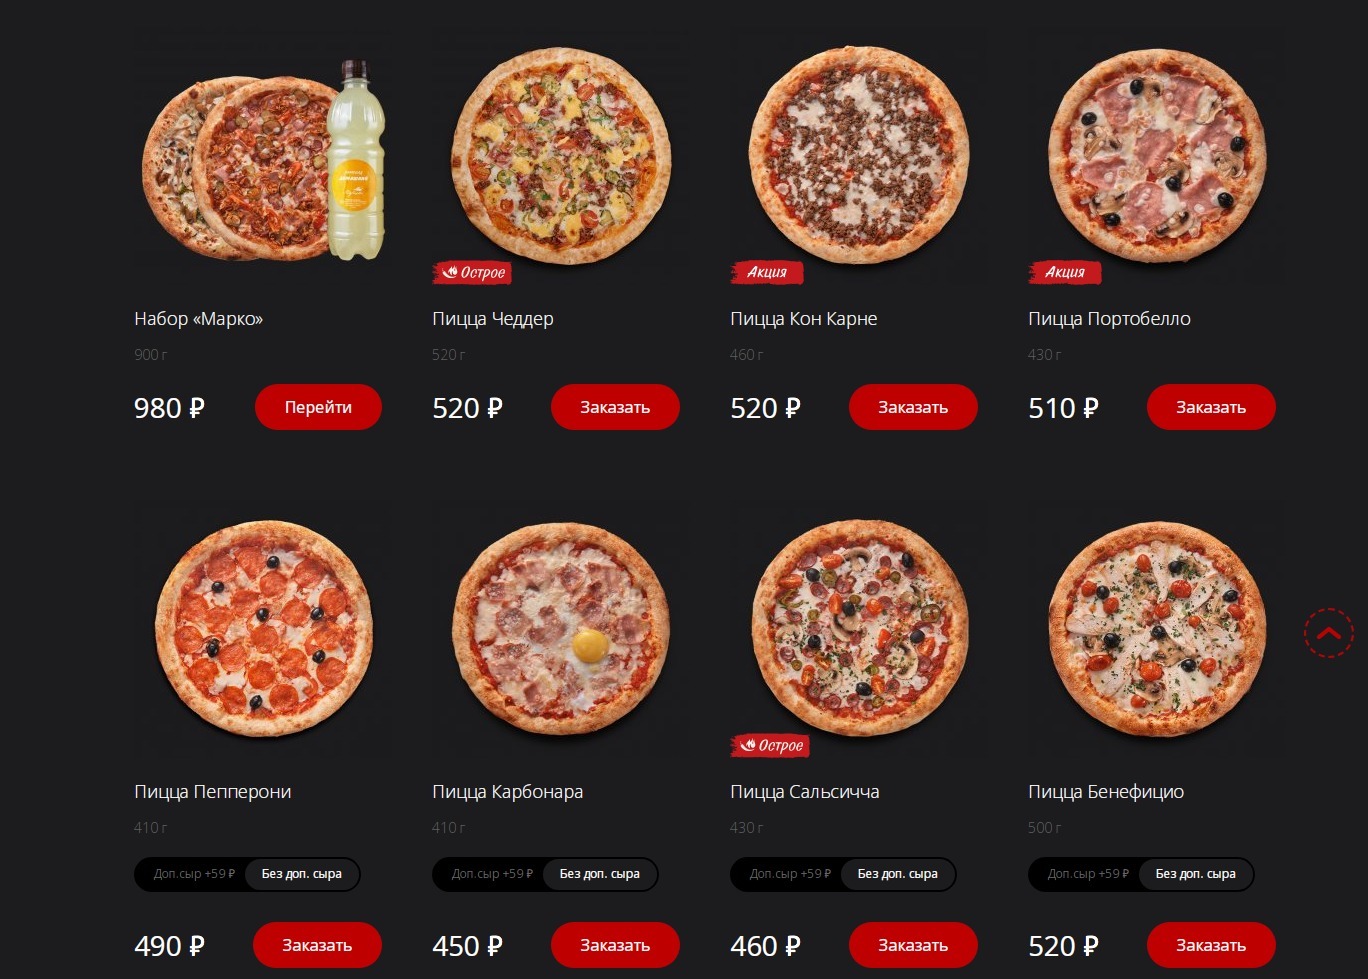 сколько стоит пицца пепперони в новосибирске фото 4